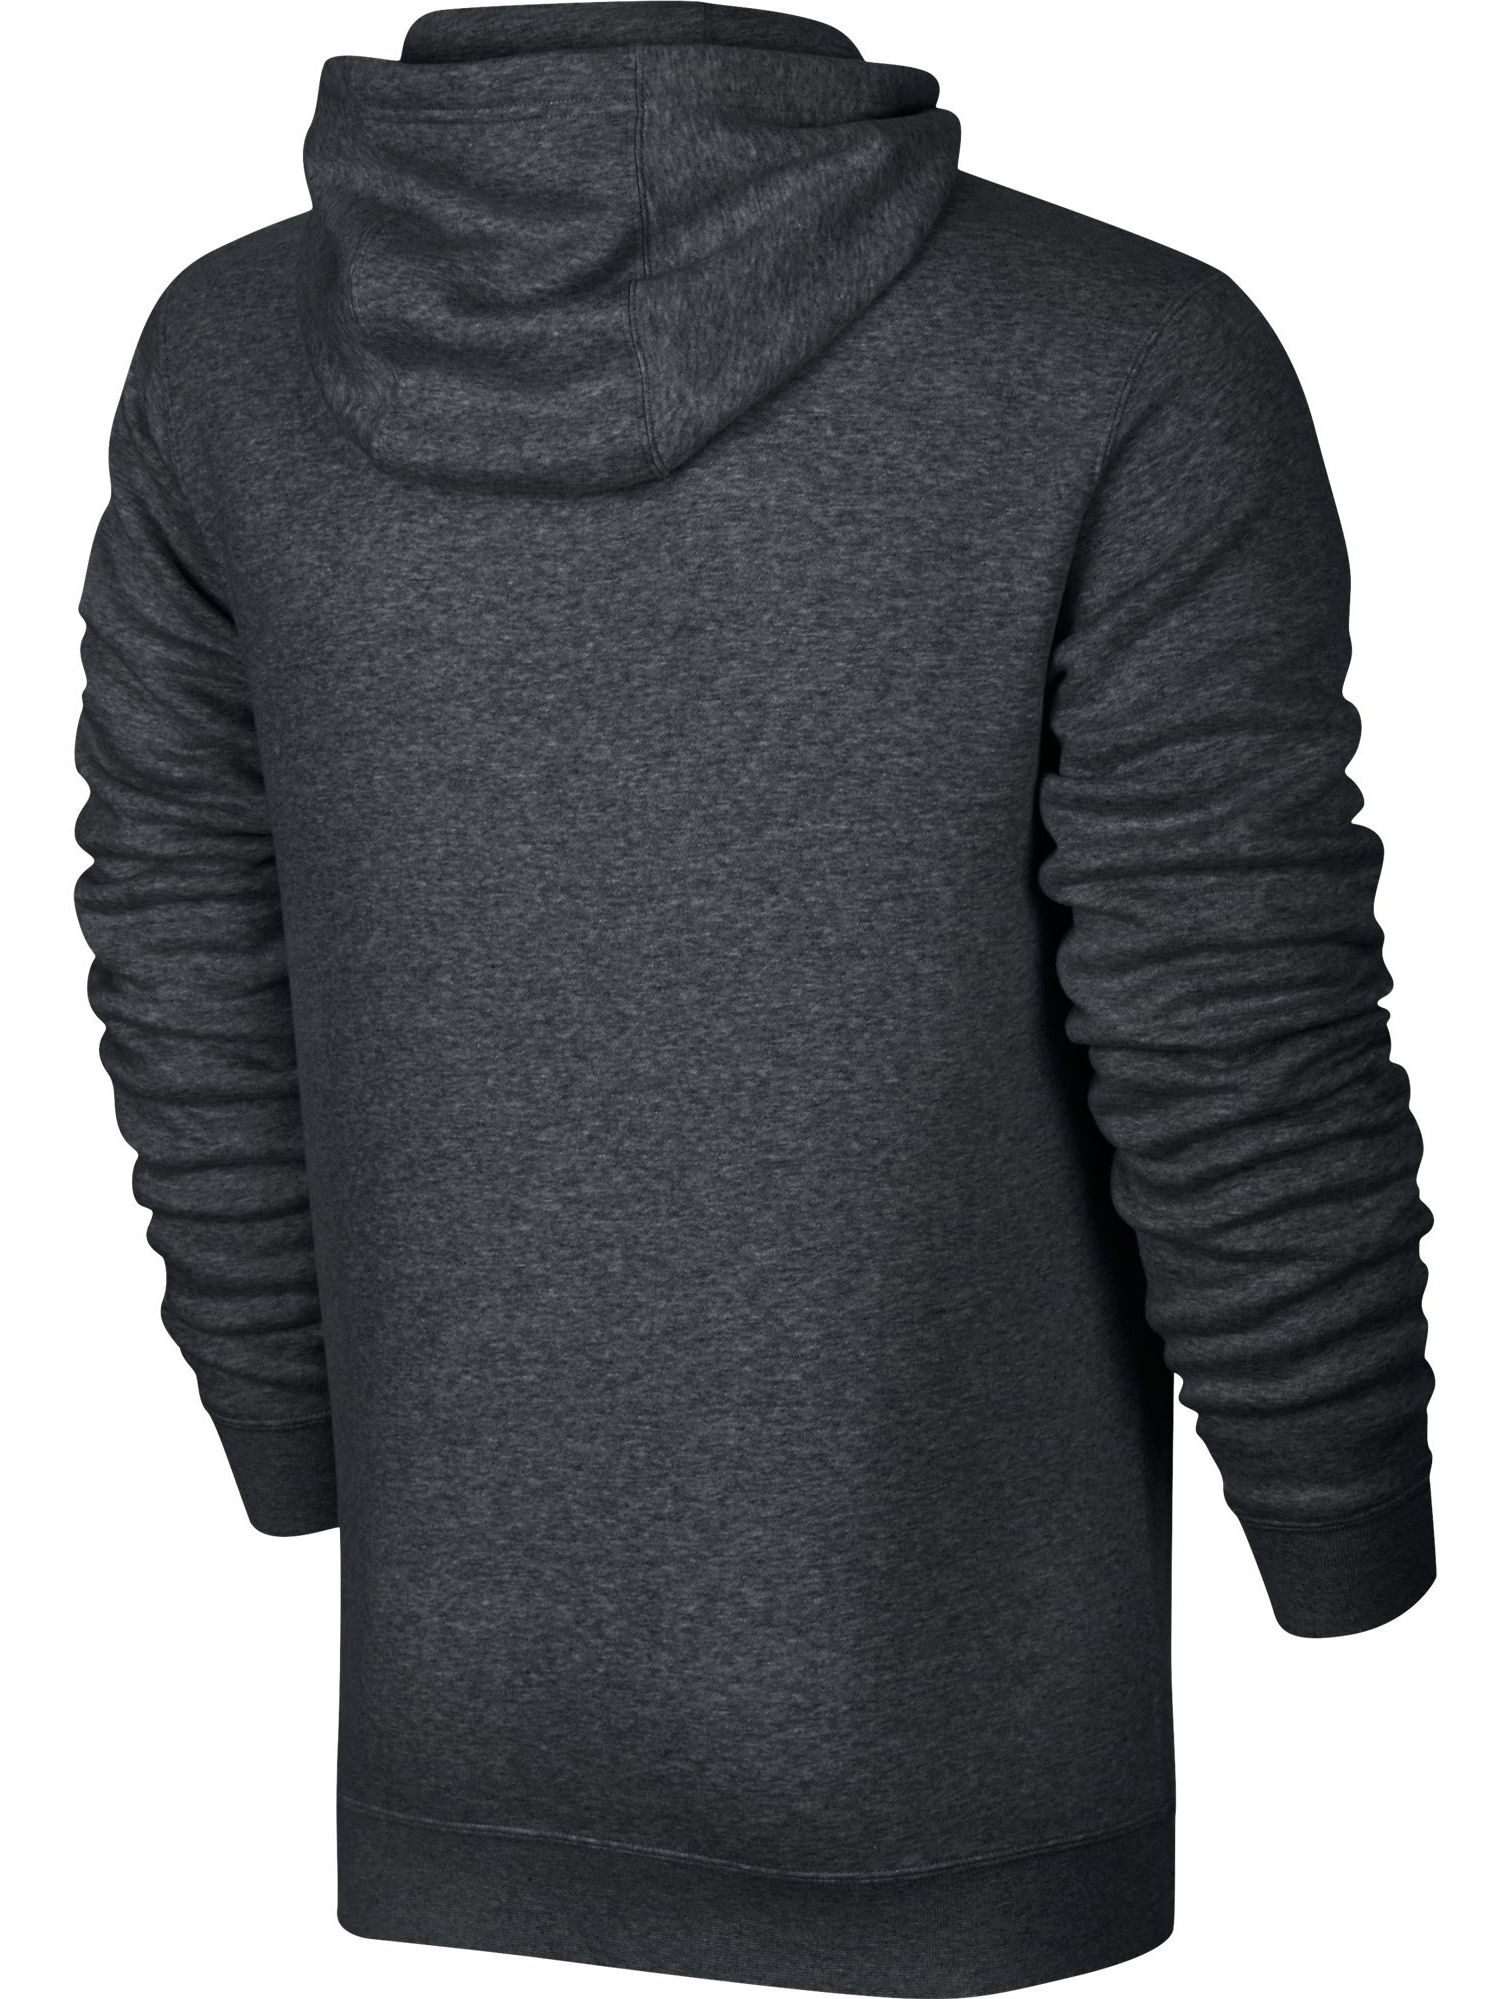 Nike Men's Sportswear Full Zip Club Hooded Sweatshirt Gray Size Medium - image 2 of 3